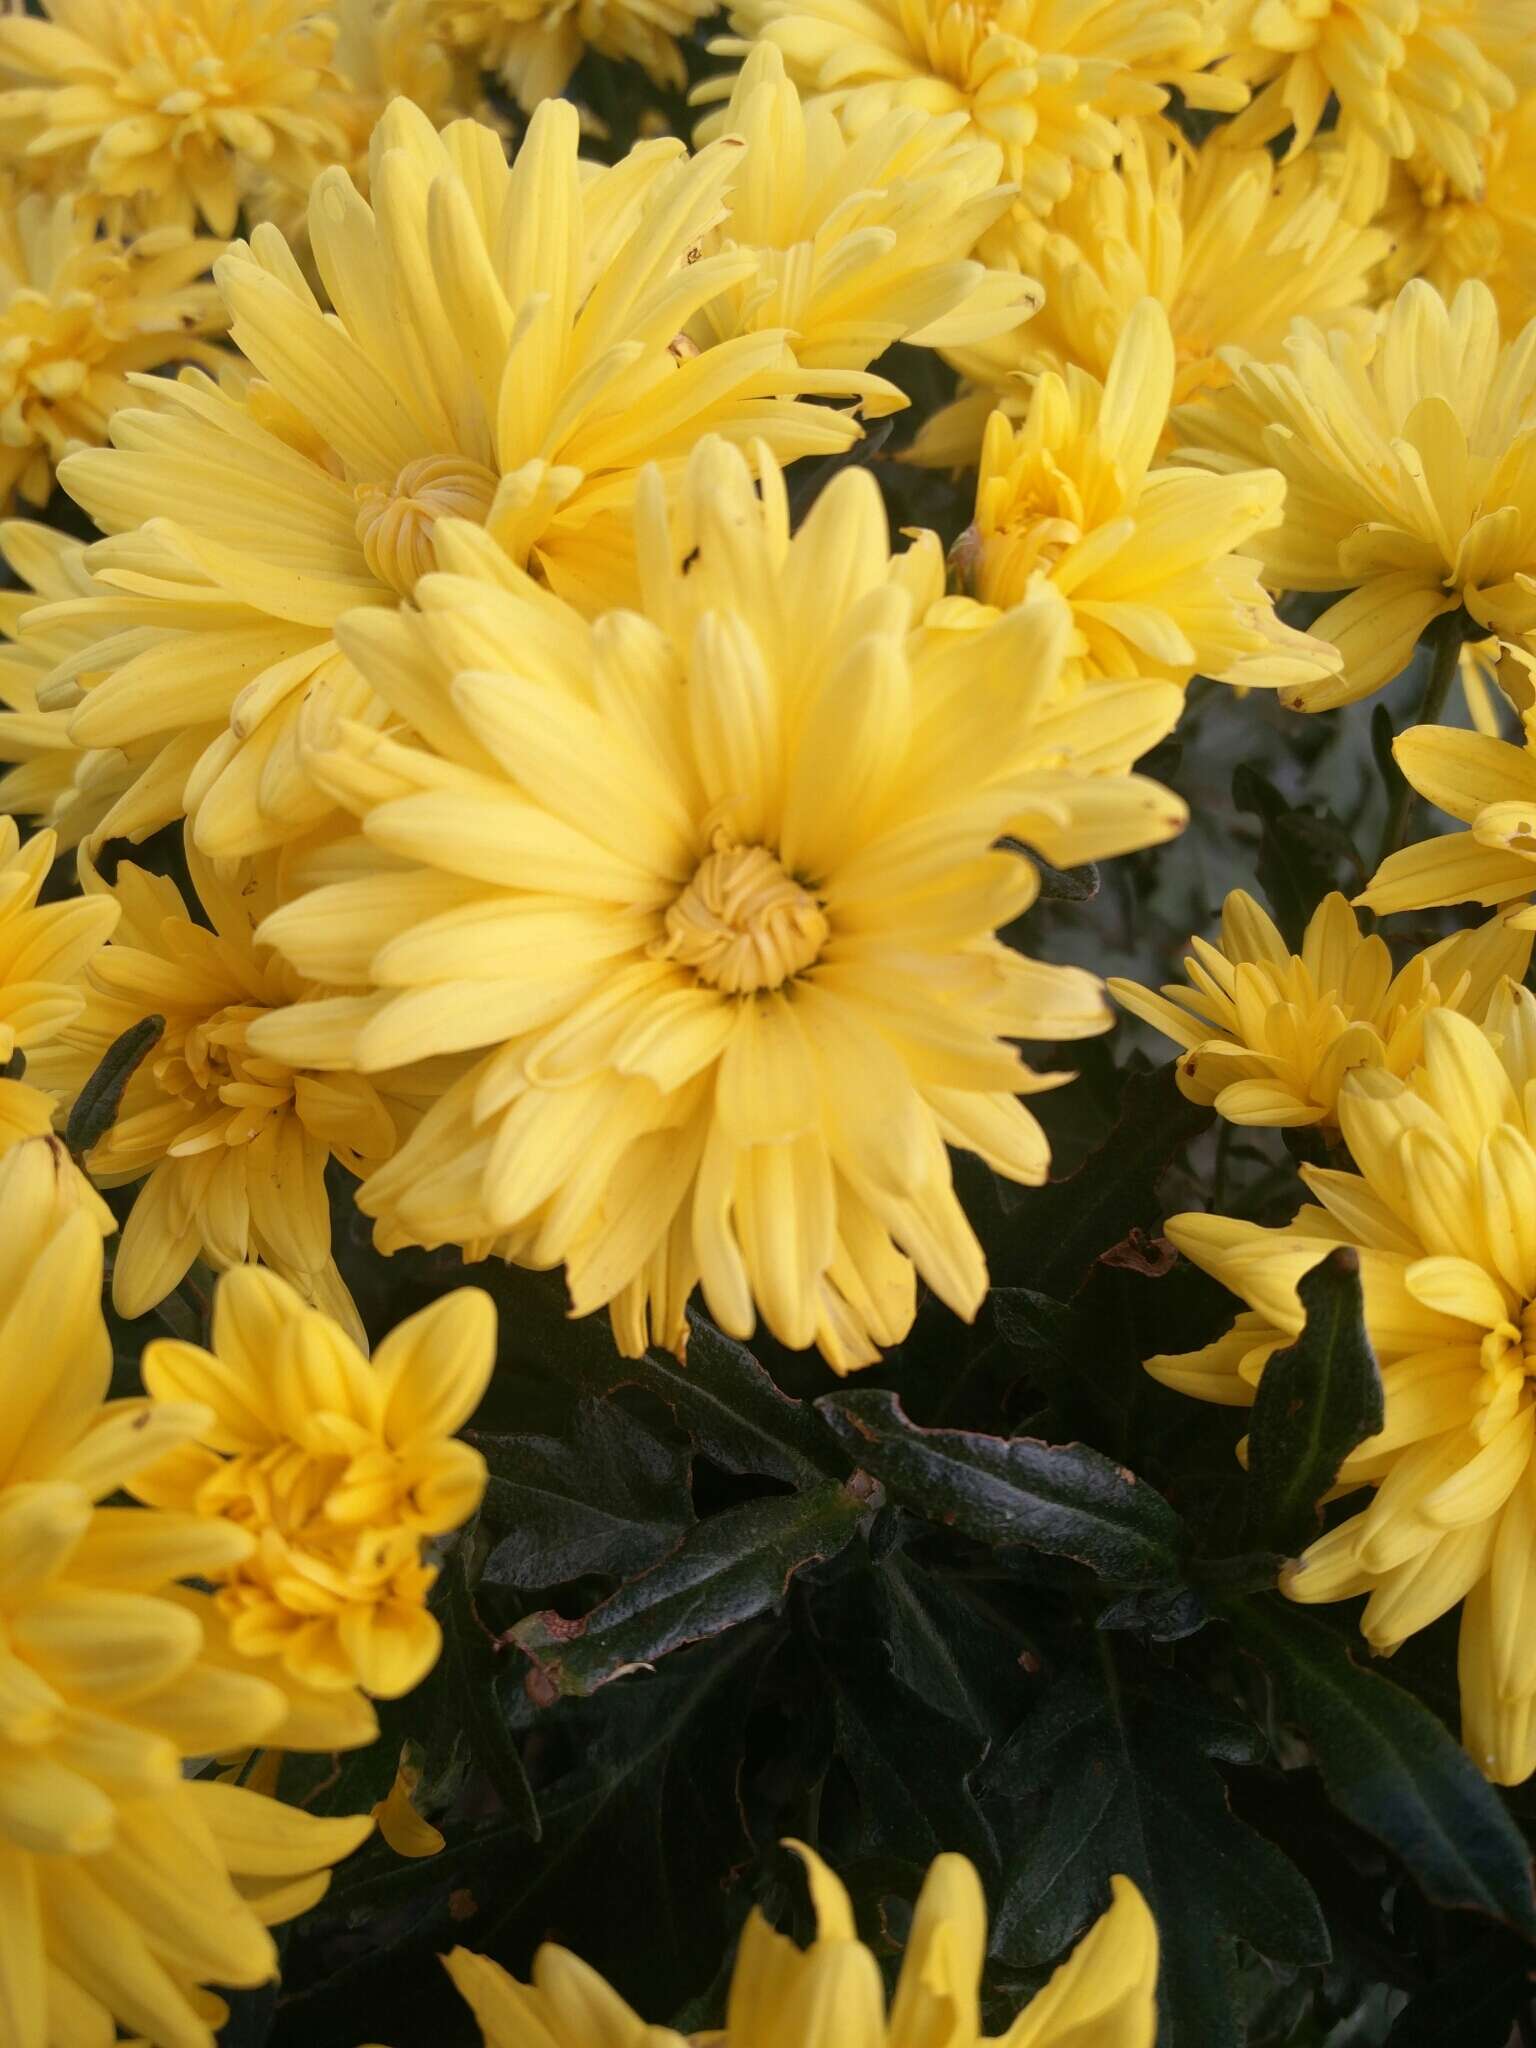 Image of florist's daisy